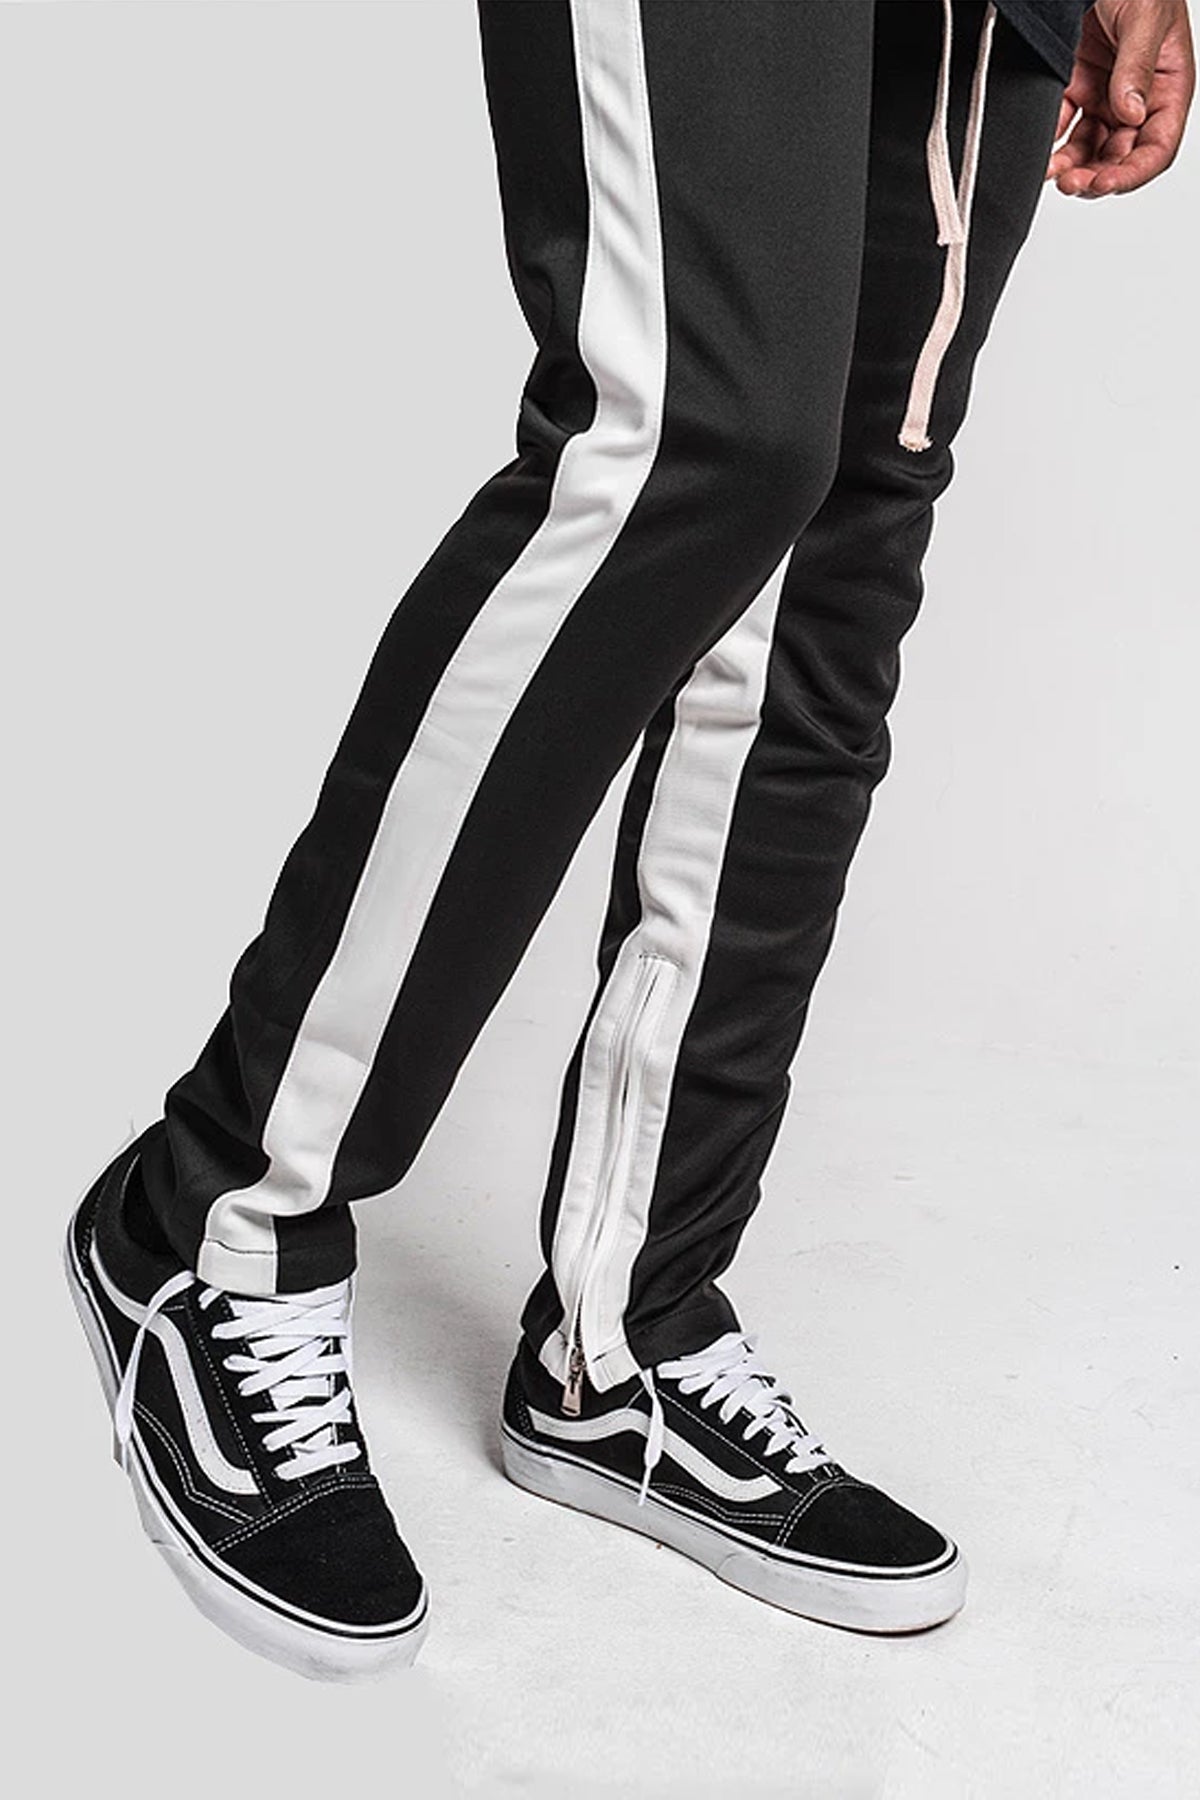 black pants side stripe